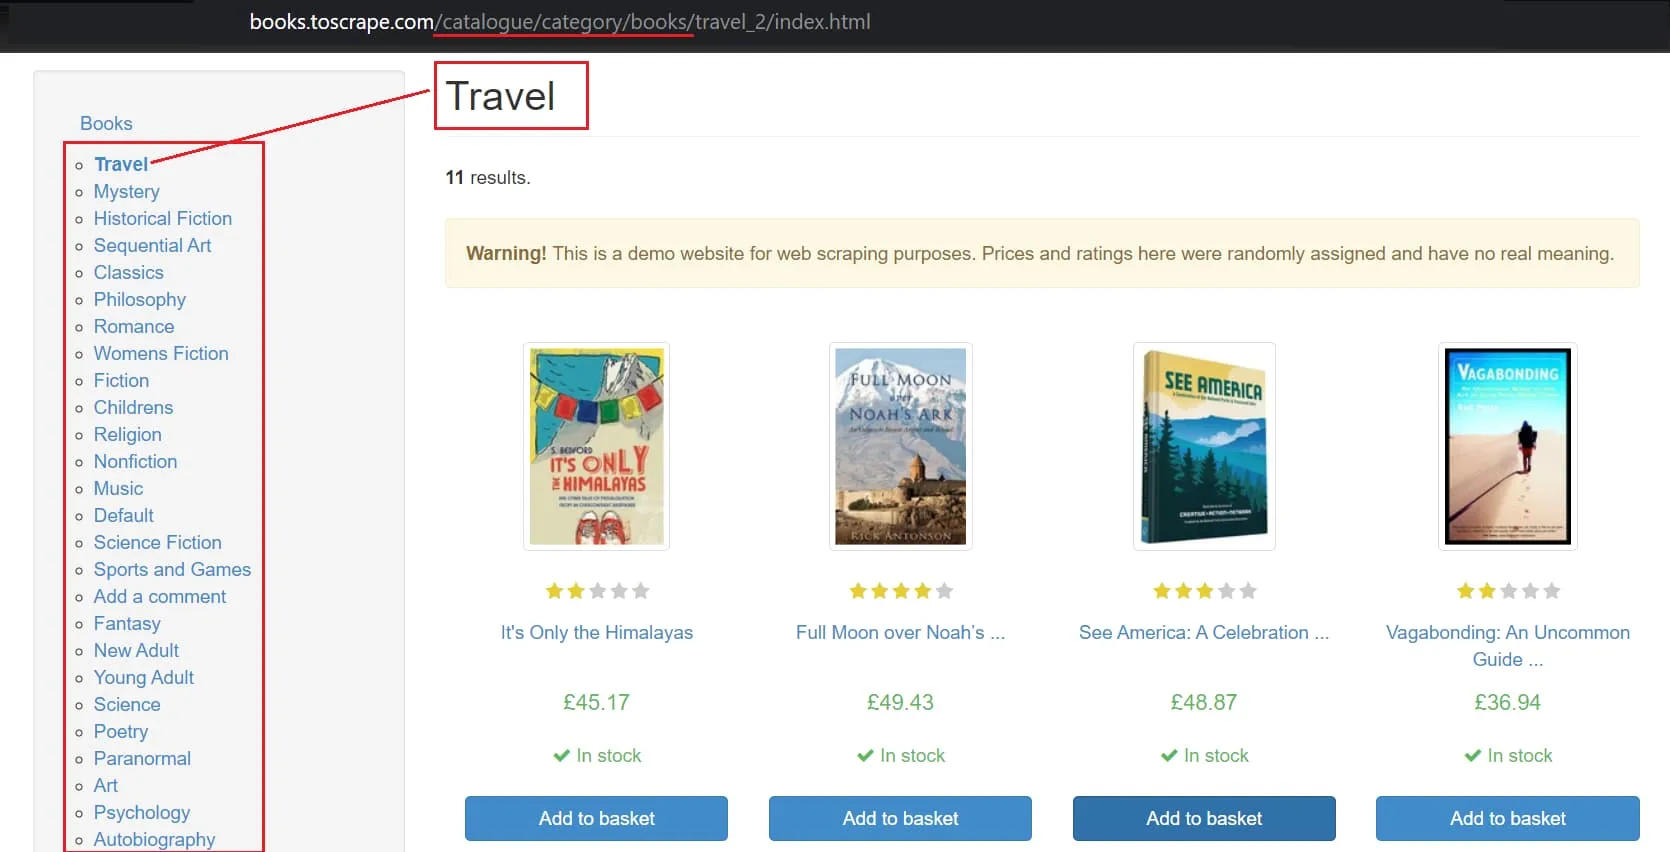 Web crawling with Python - Bookstoscrape Travel category